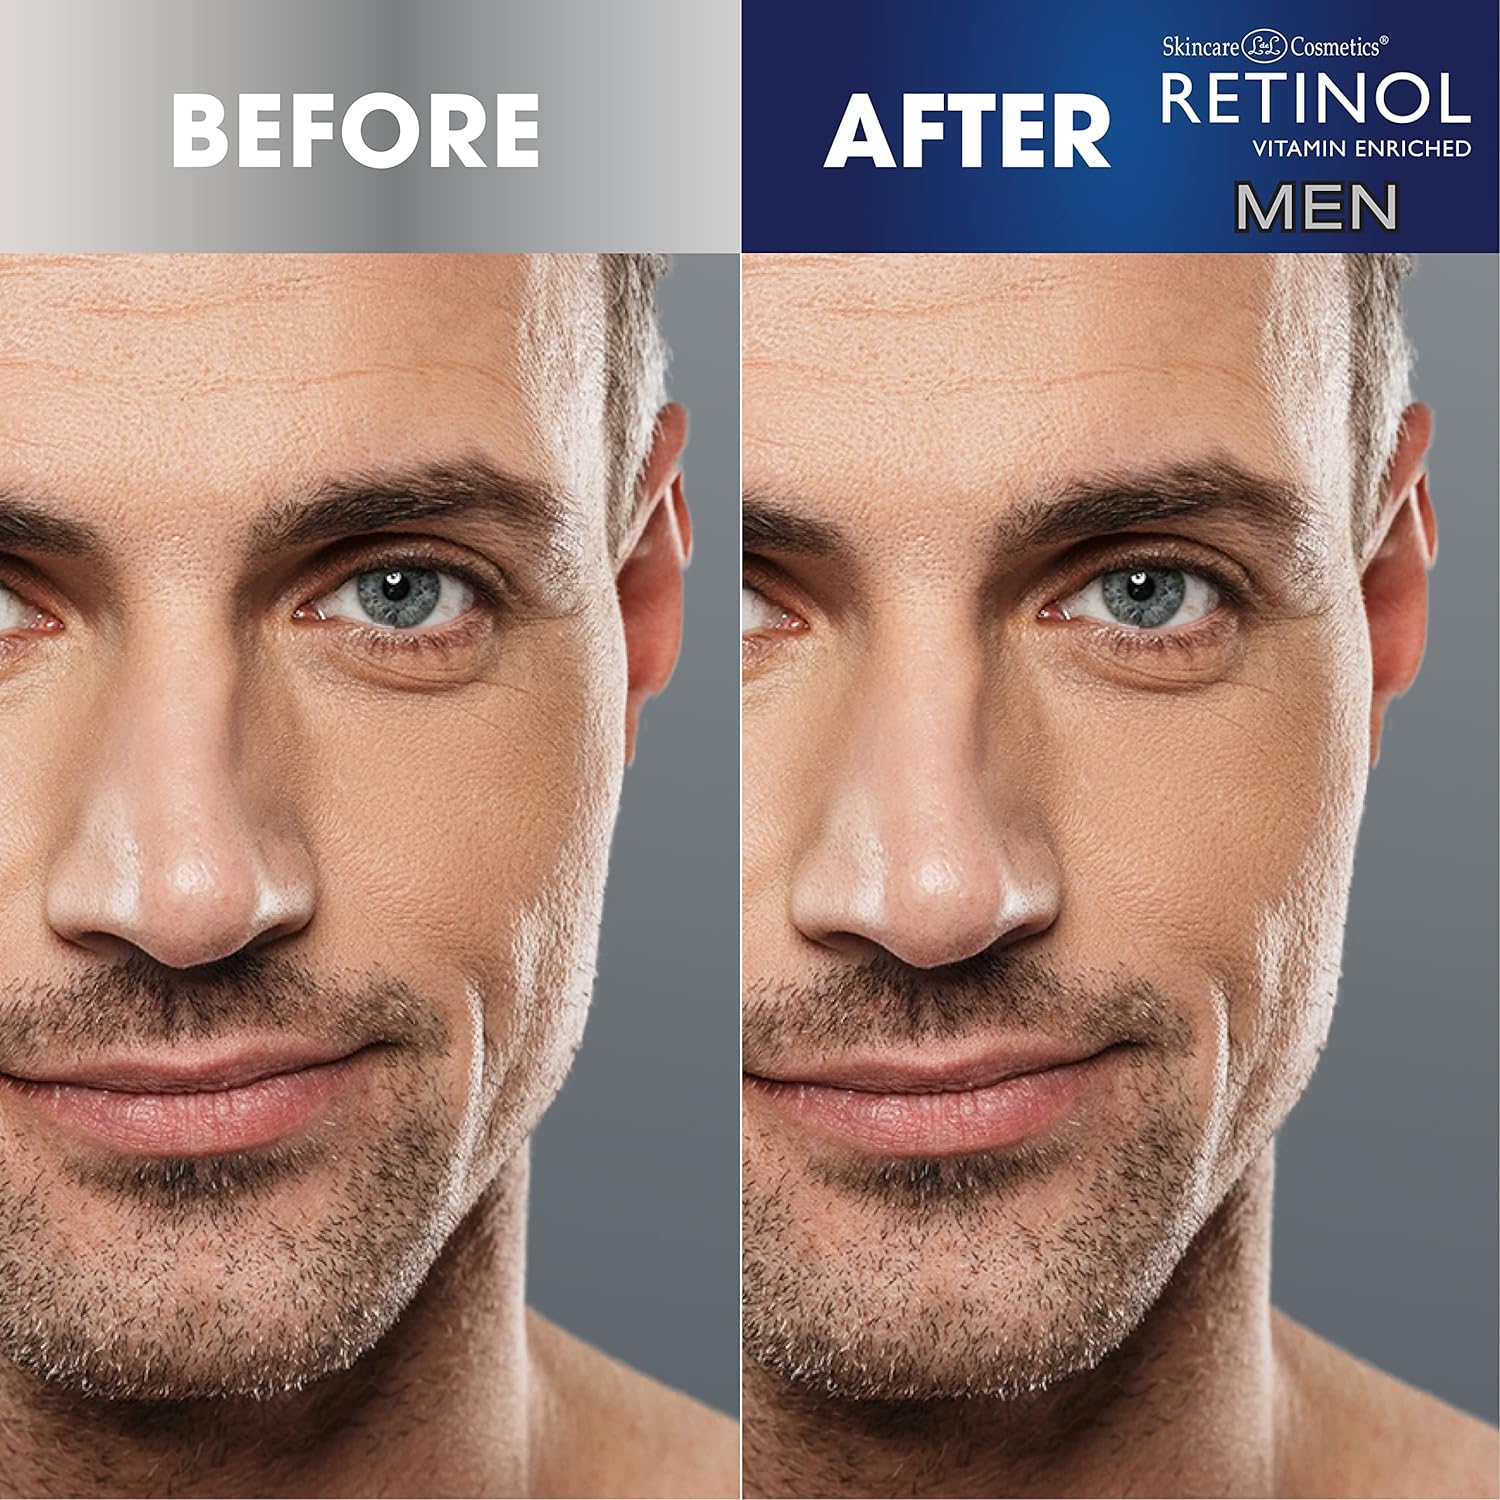 Esupli.com Retinol Men’s Anti-Wrinkle Facial Serum – The Original Retin